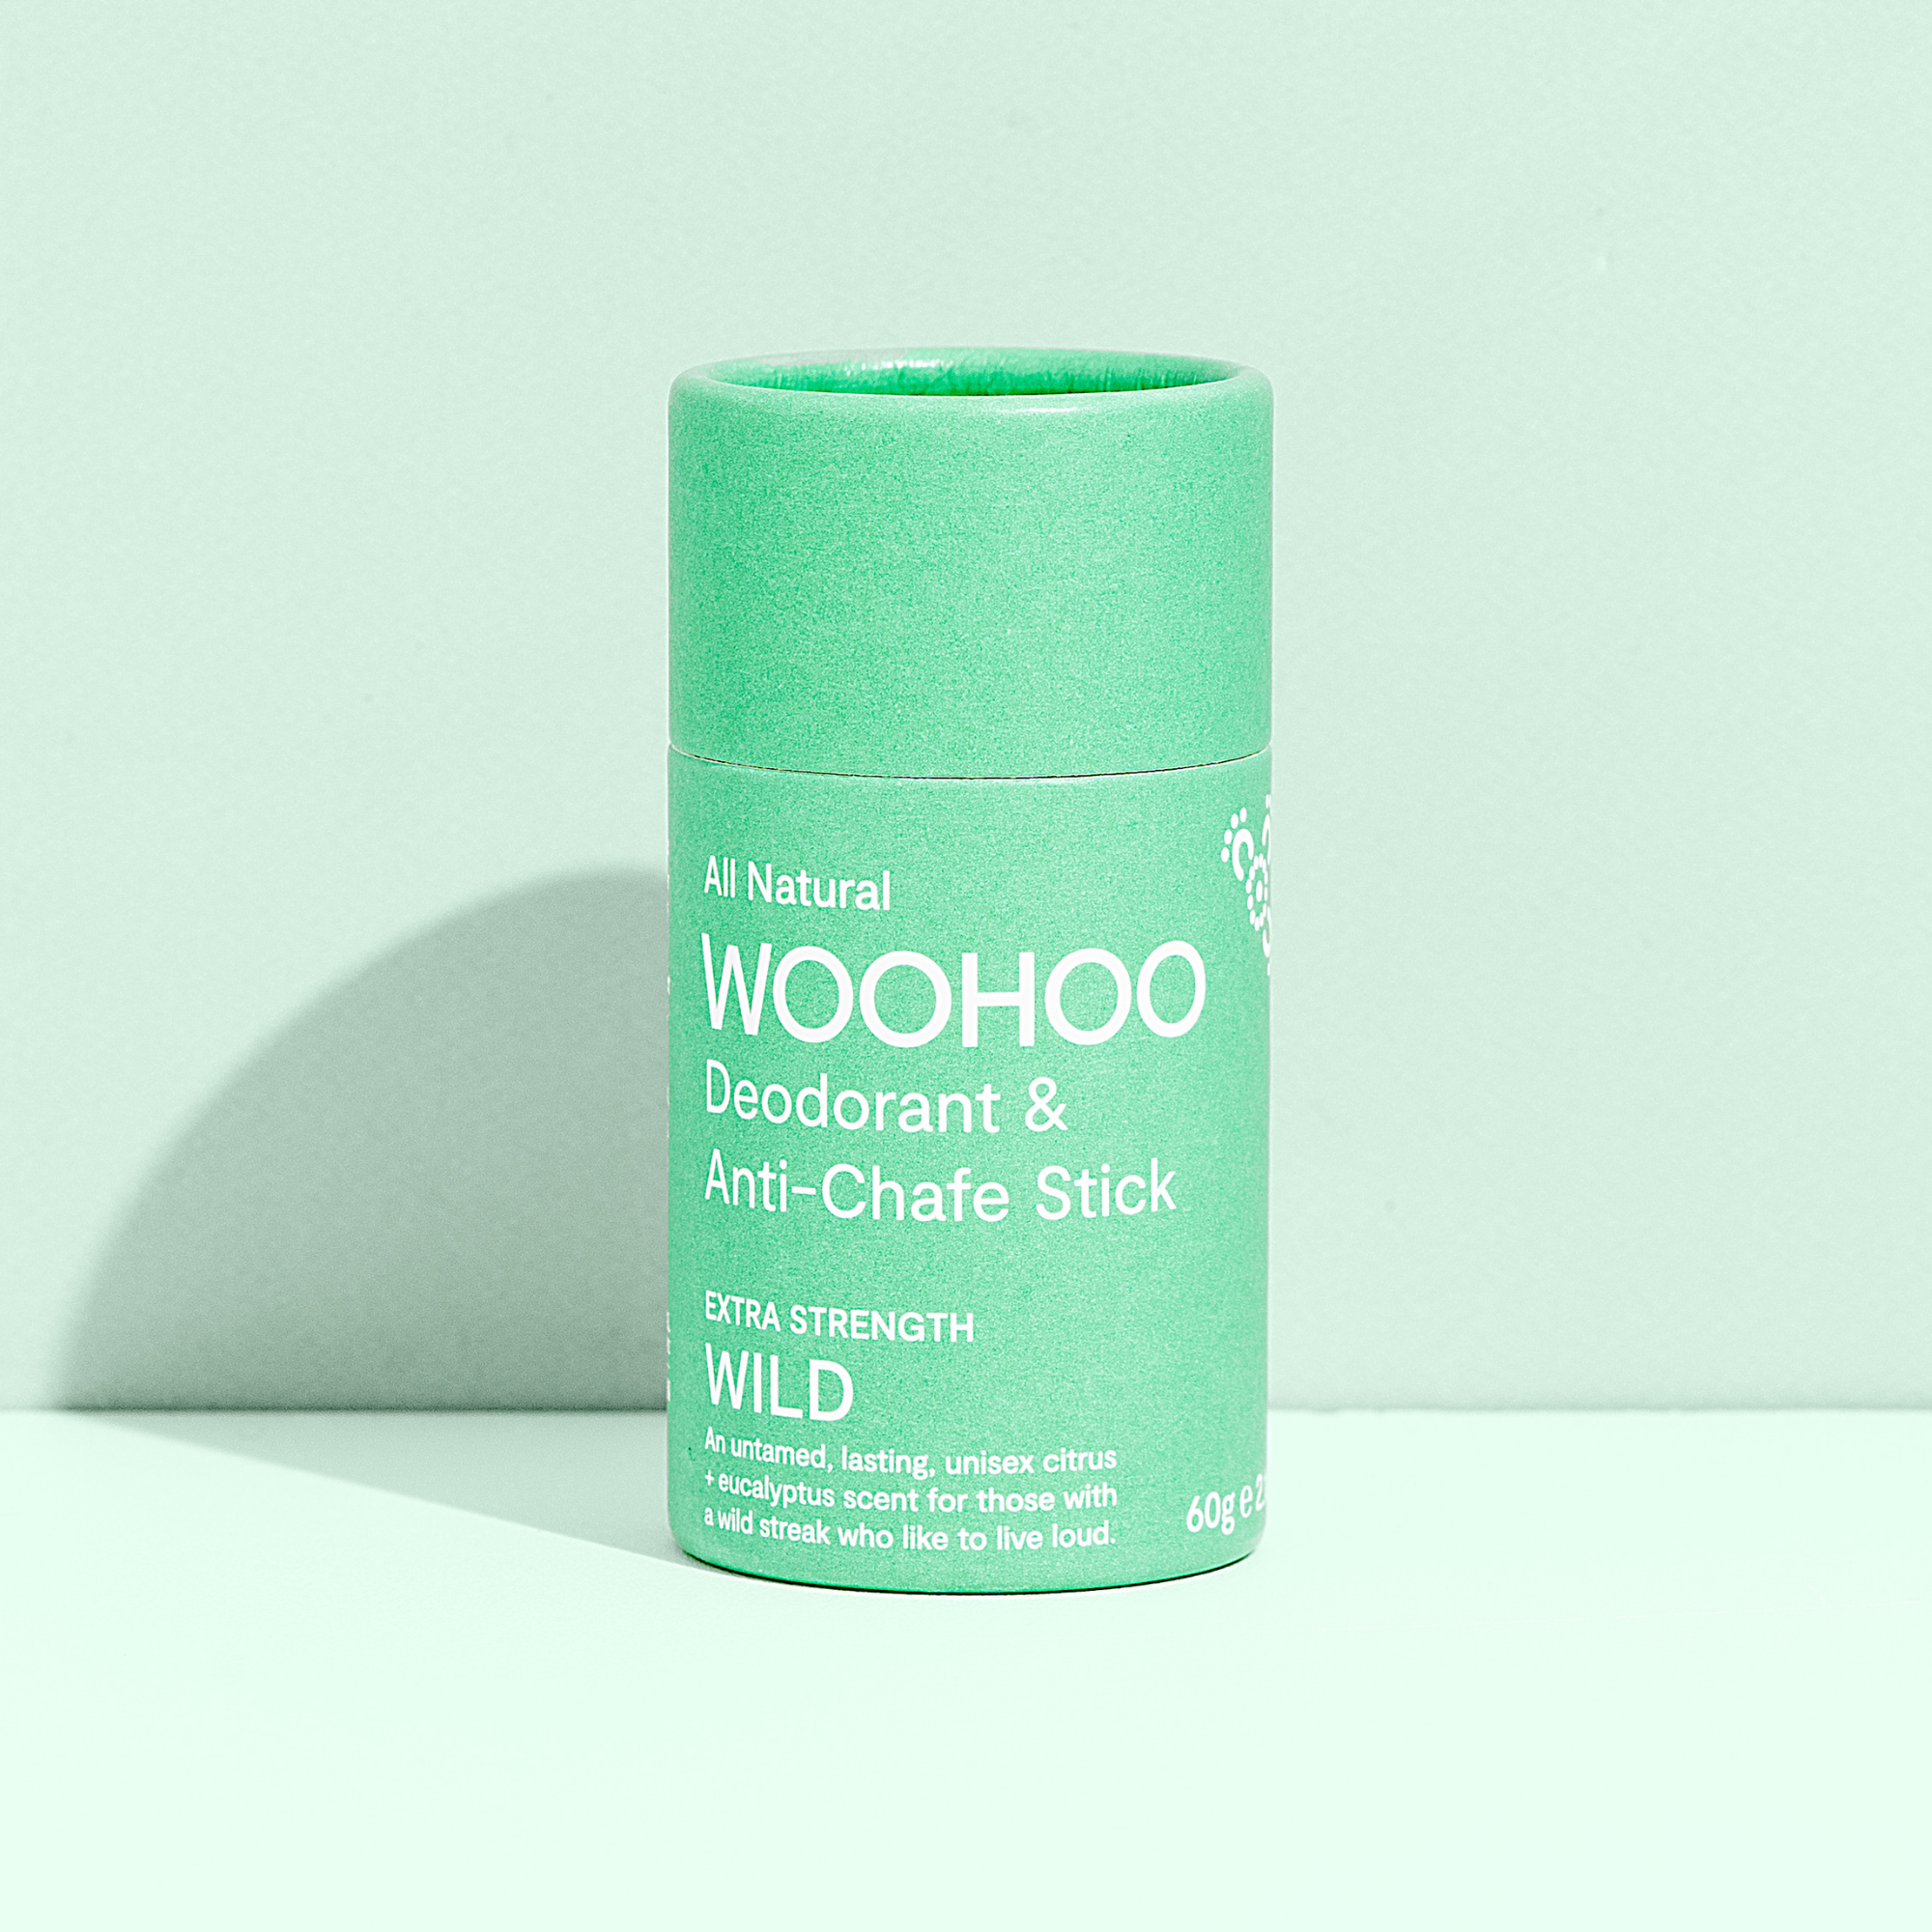 Woohoo Body - Natural Deodorant & Anti-Chafe Stick - Wild (60g)